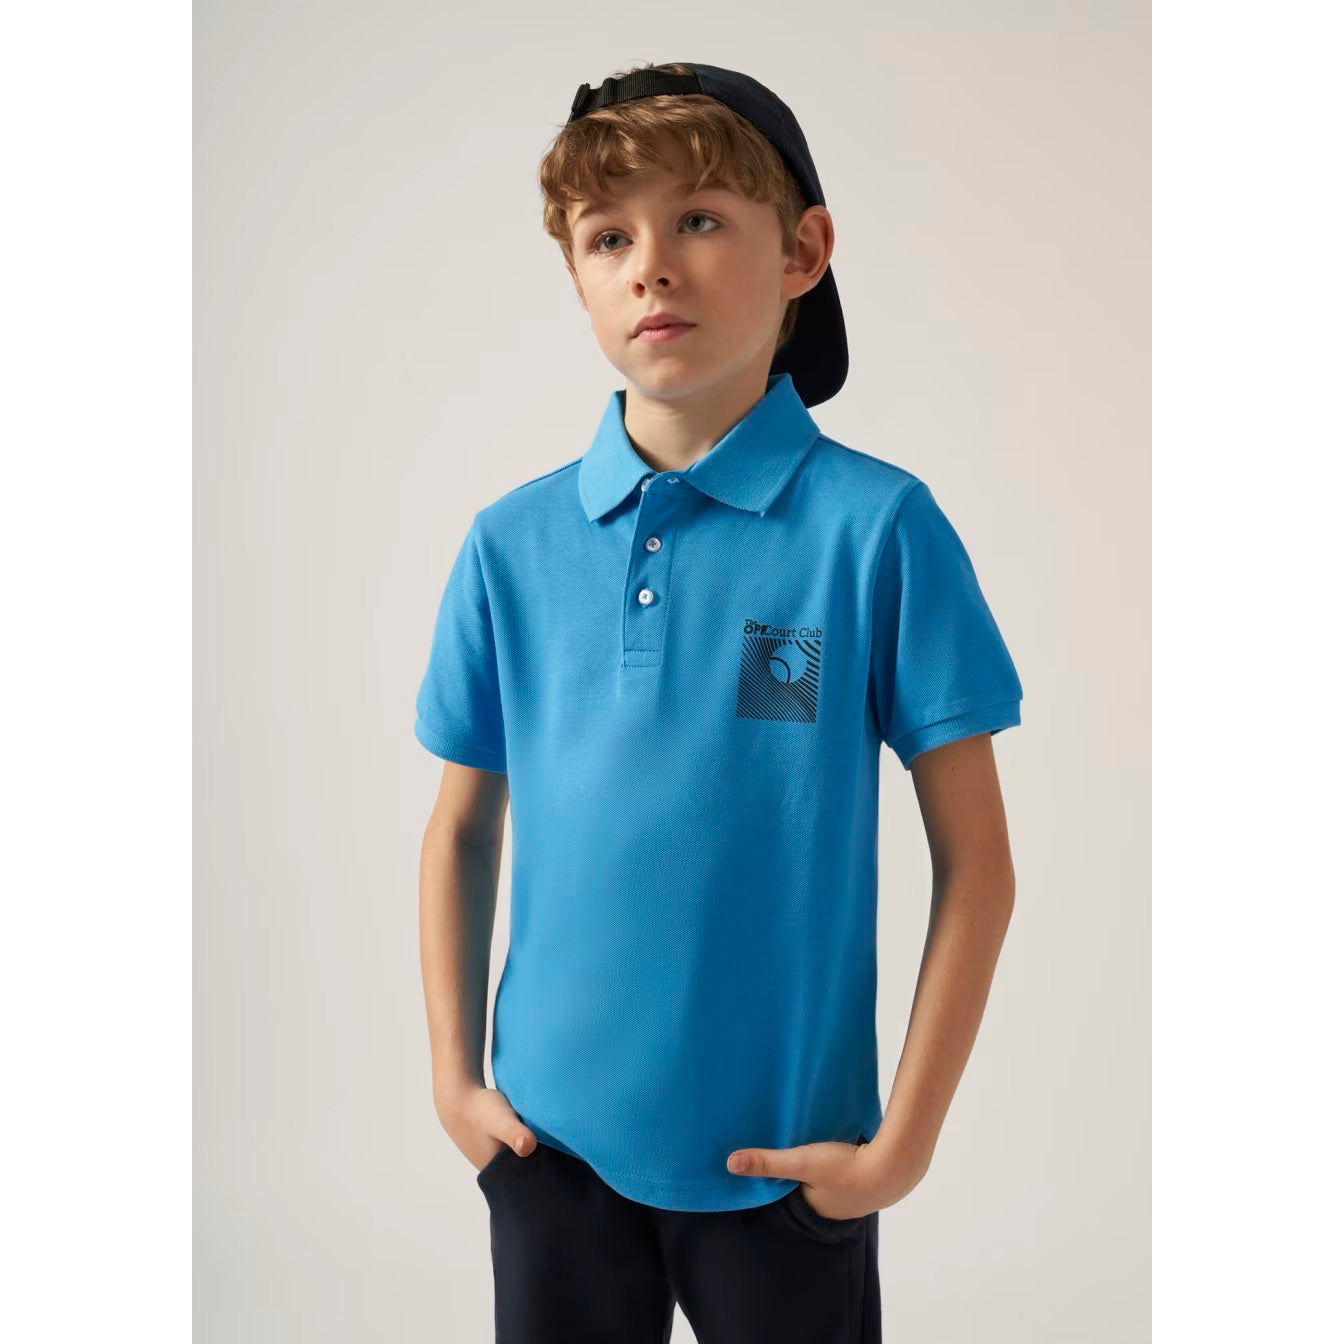 Mayoral Older Boys Tennis Polo Shirt 6112 Clothing 10YRS / Blue,12YRS / Blue,14YRS / Blue